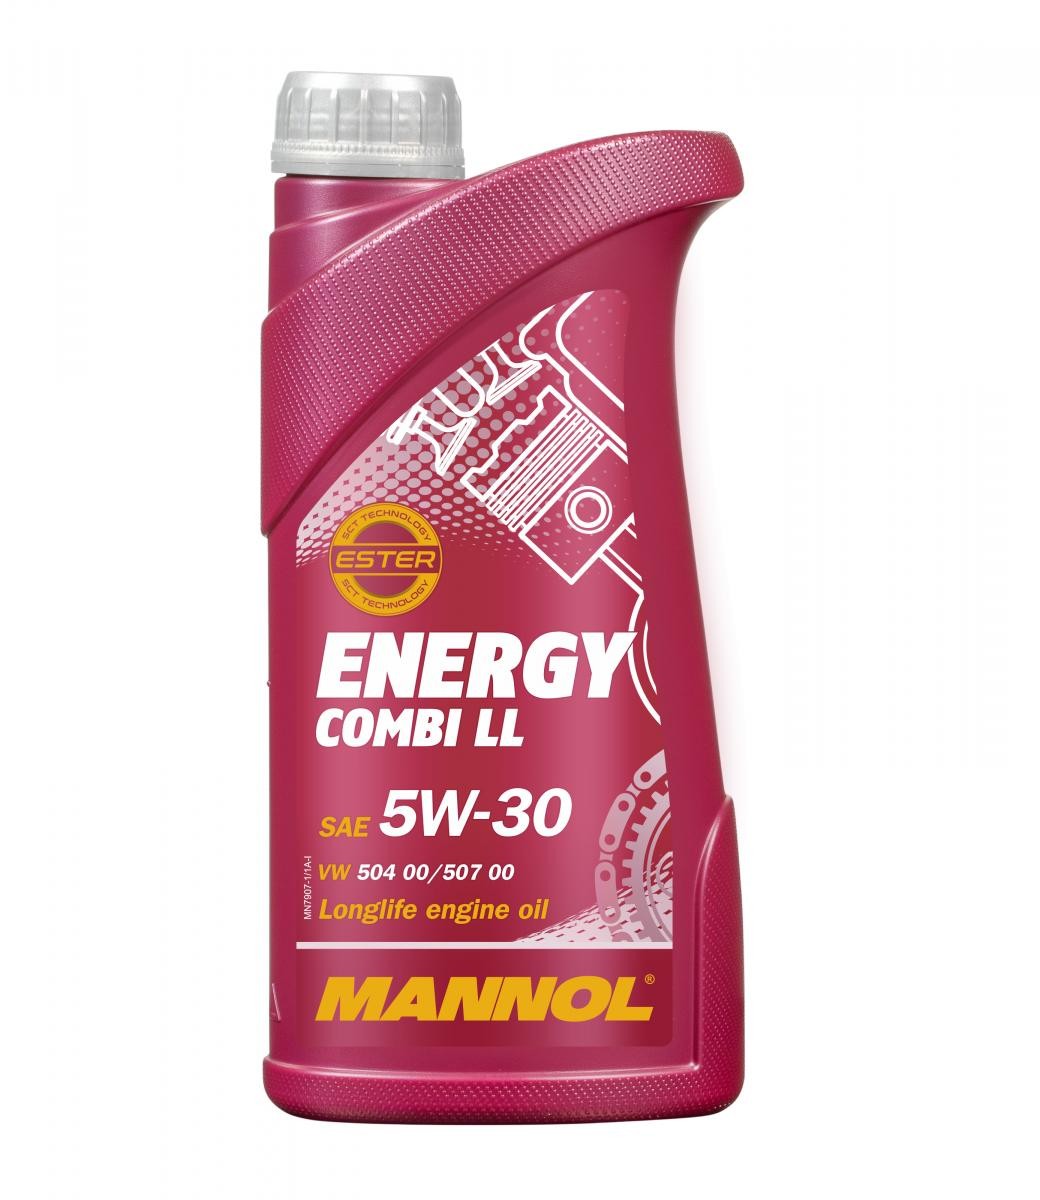 MANNOL ENERGY COMBI LL MN7907-1 Motoröl